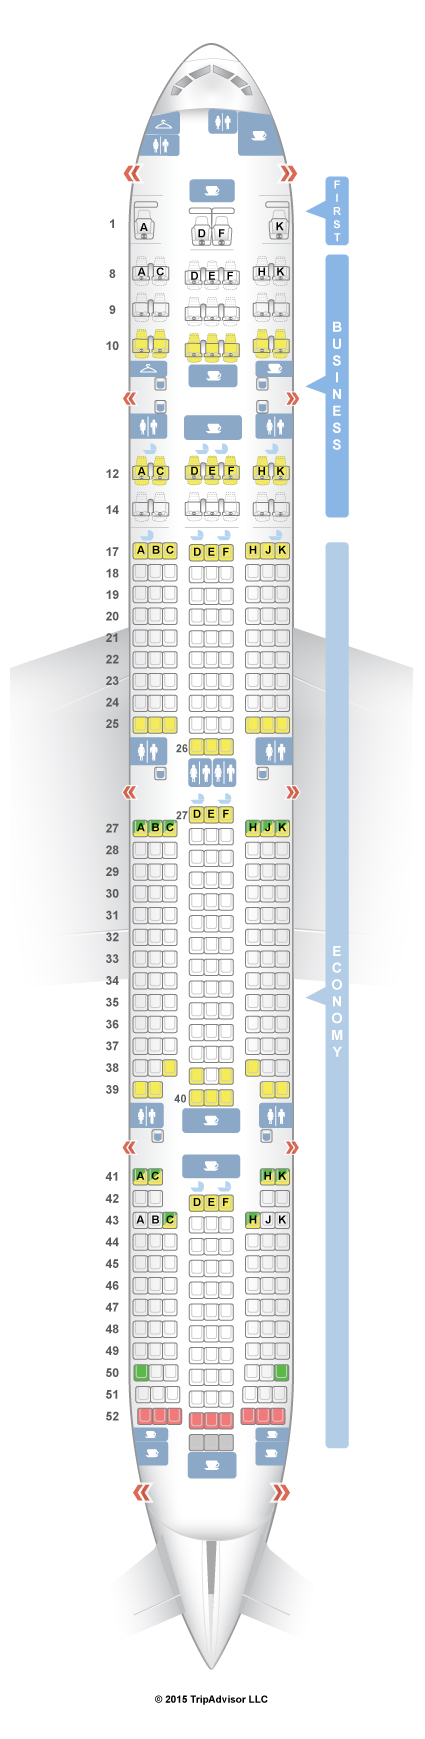 Air India Flight Seating Chart